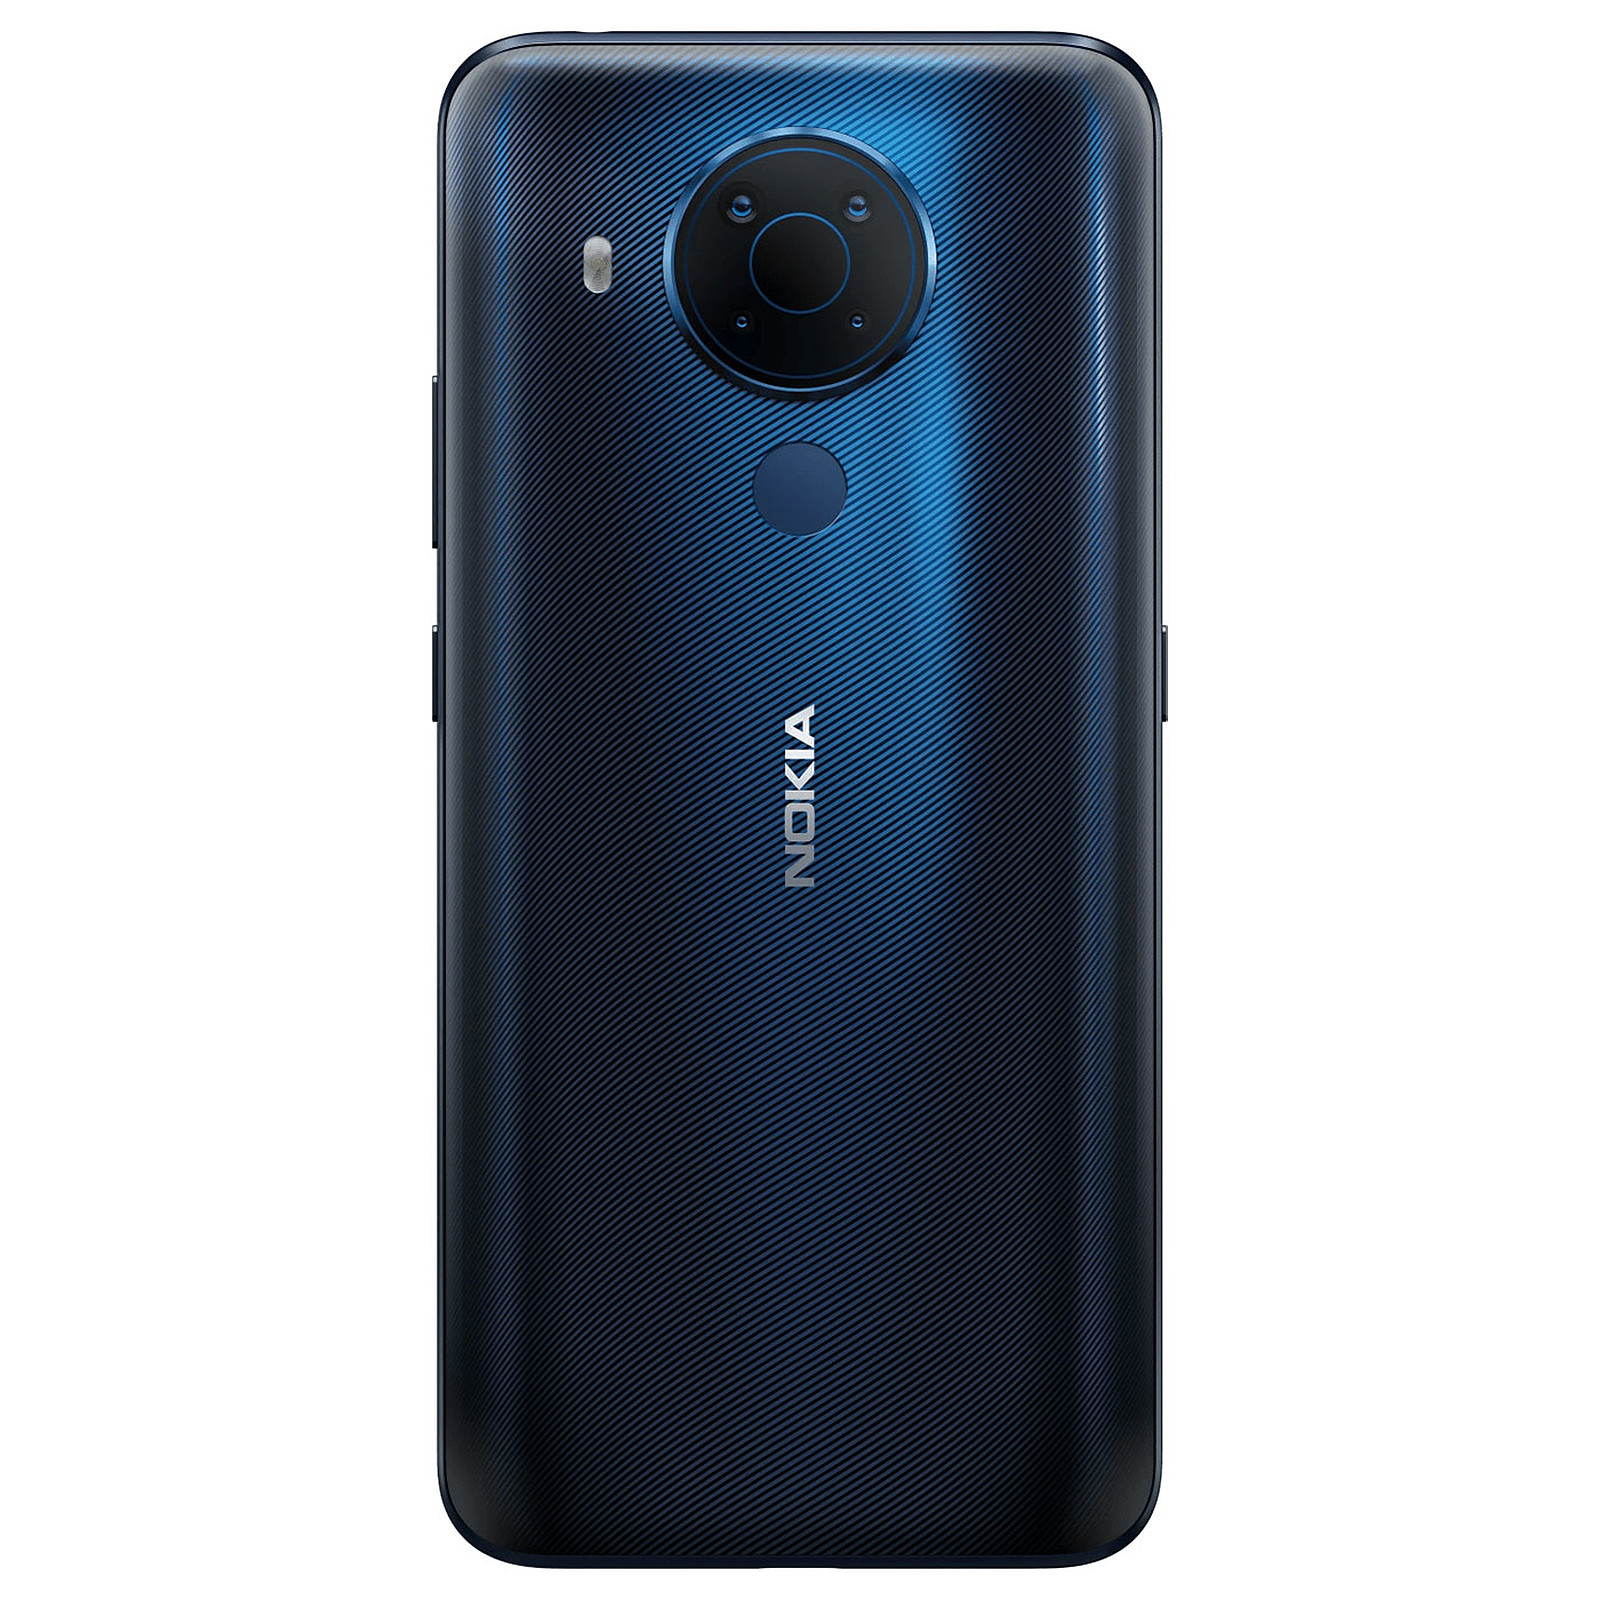 Nokia 5.4 128GB blue Smartphone Dual Sim ohne Simlock hervorragend